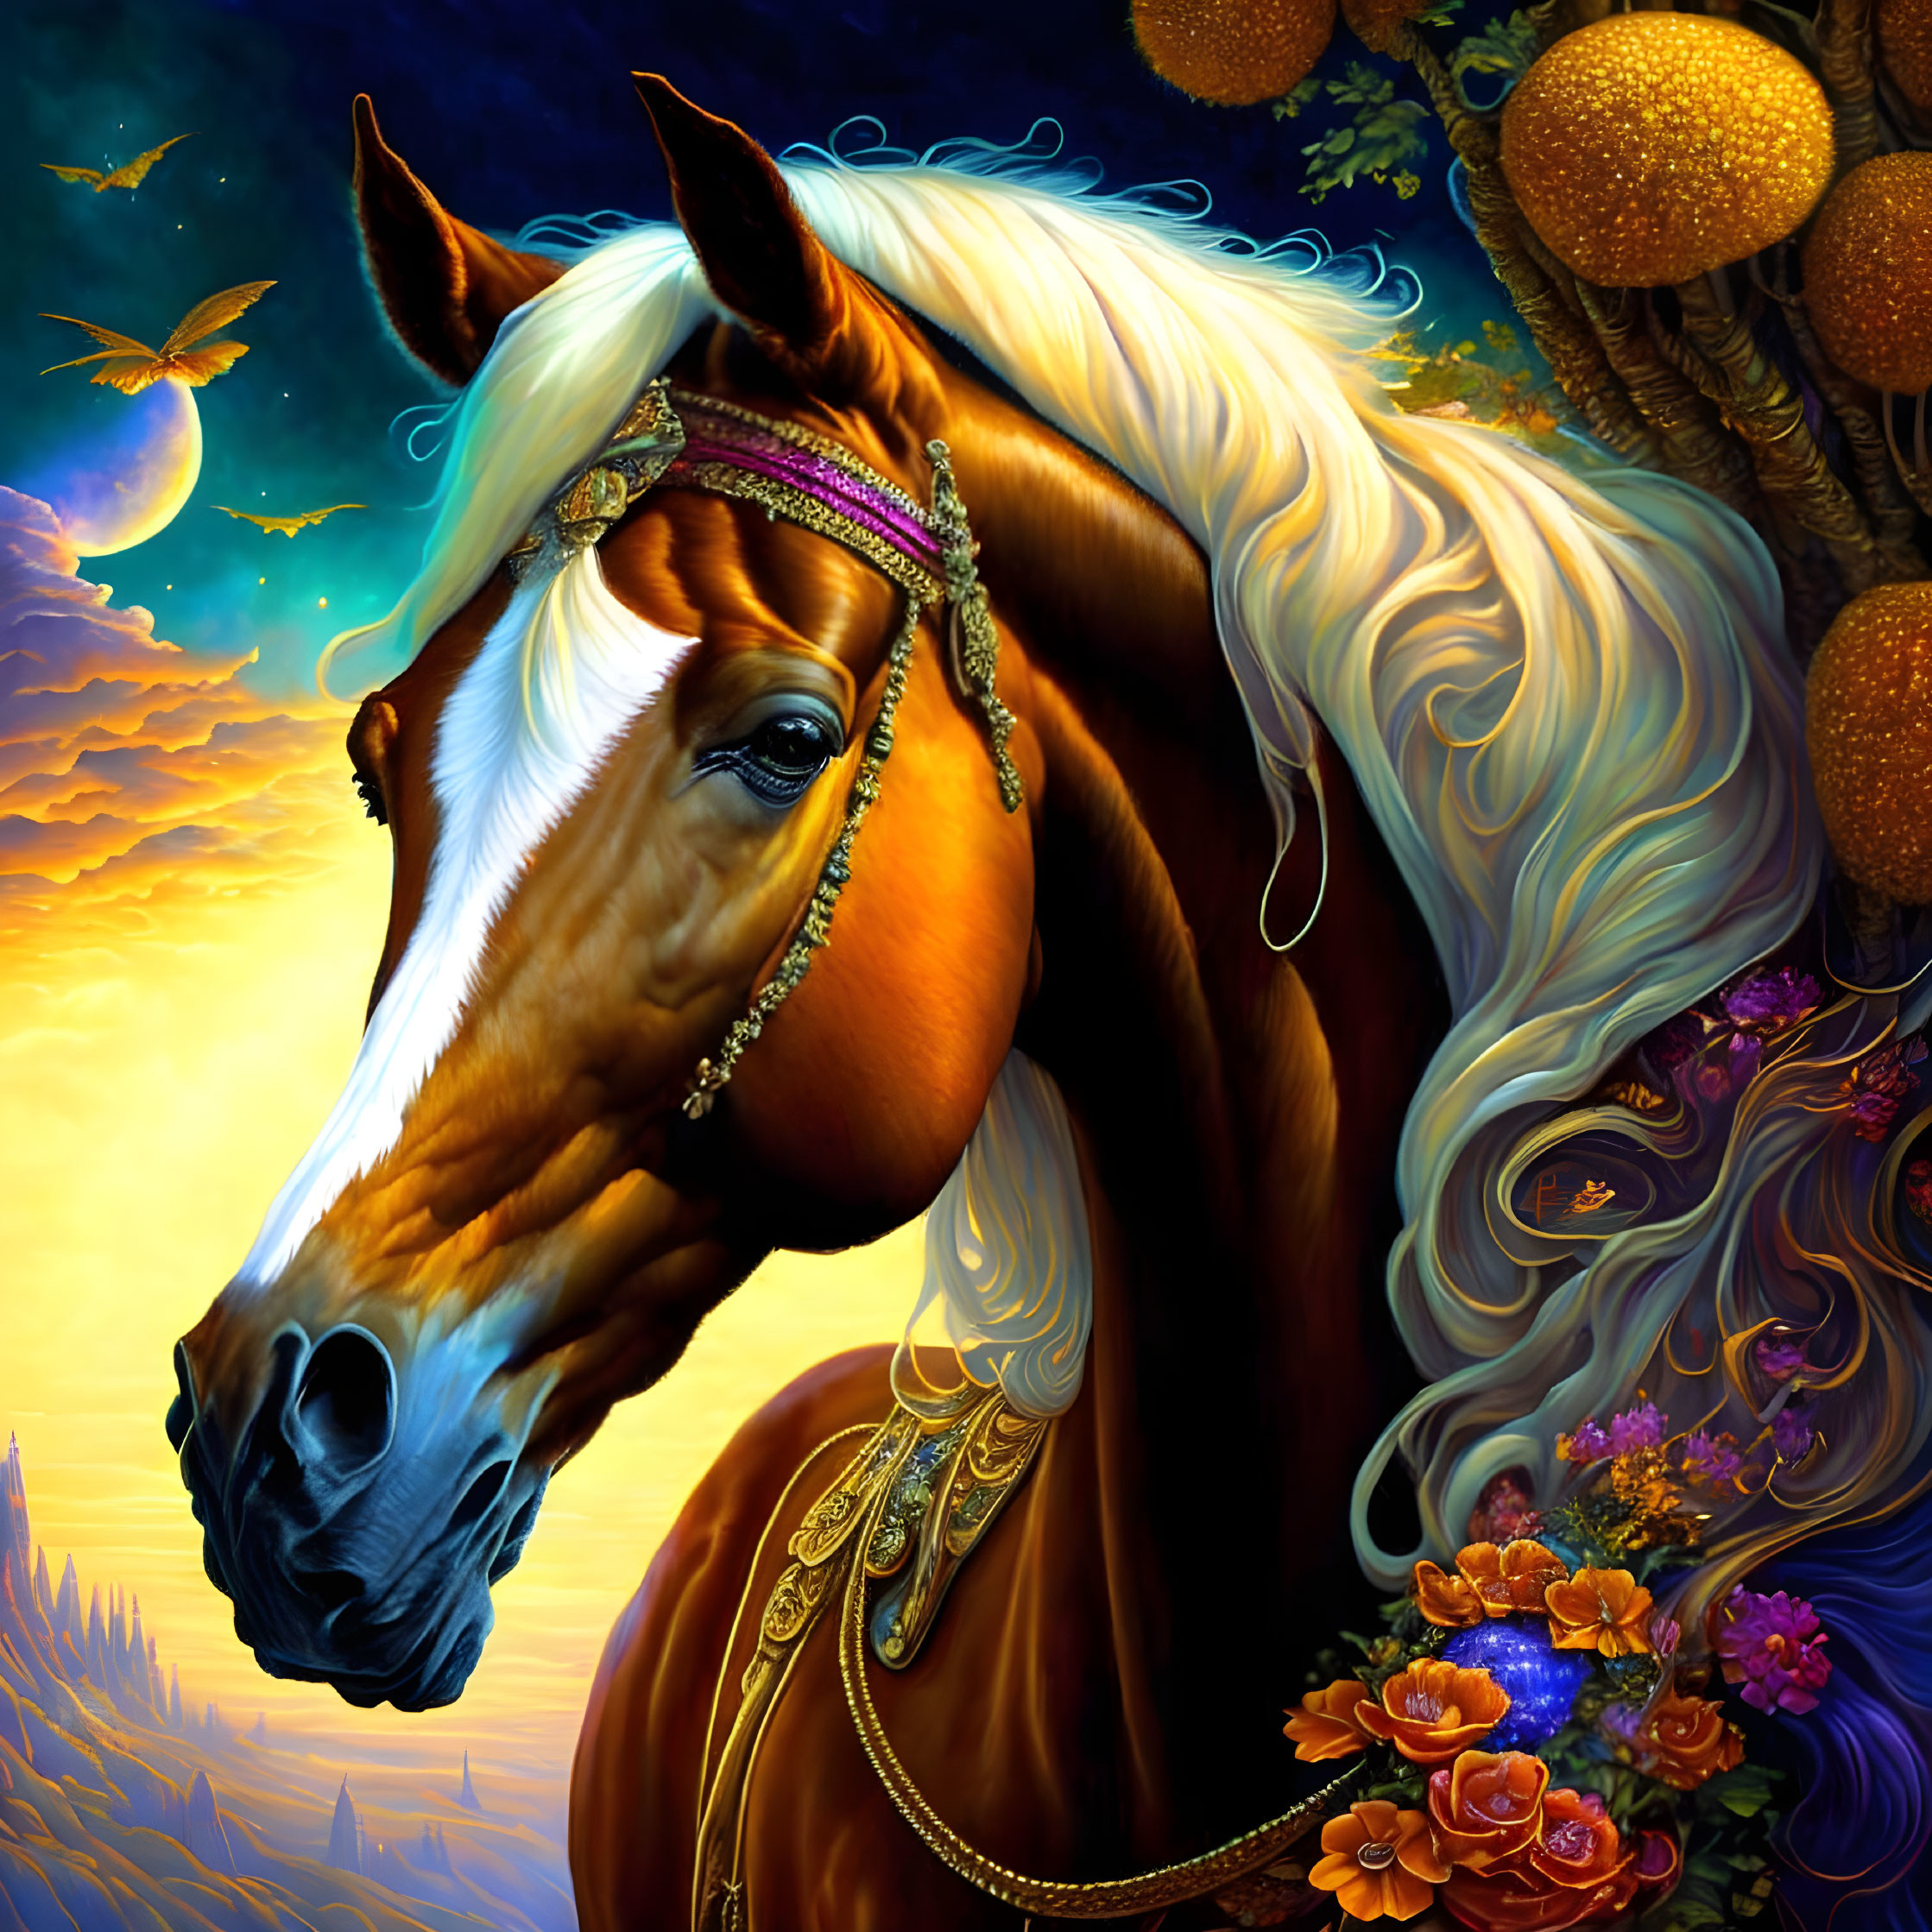  Fantasy art, A Horse with No Name